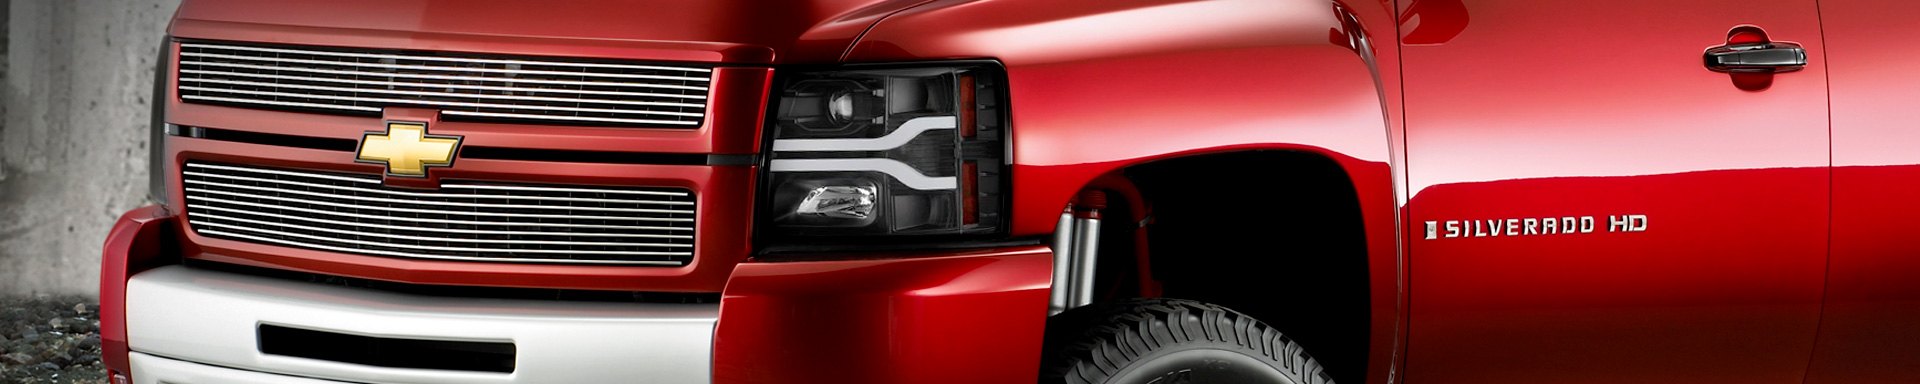 First Look At New Spyder Platinum Series Headlights For 07-14 Silverado 1500/2500/3500 HD